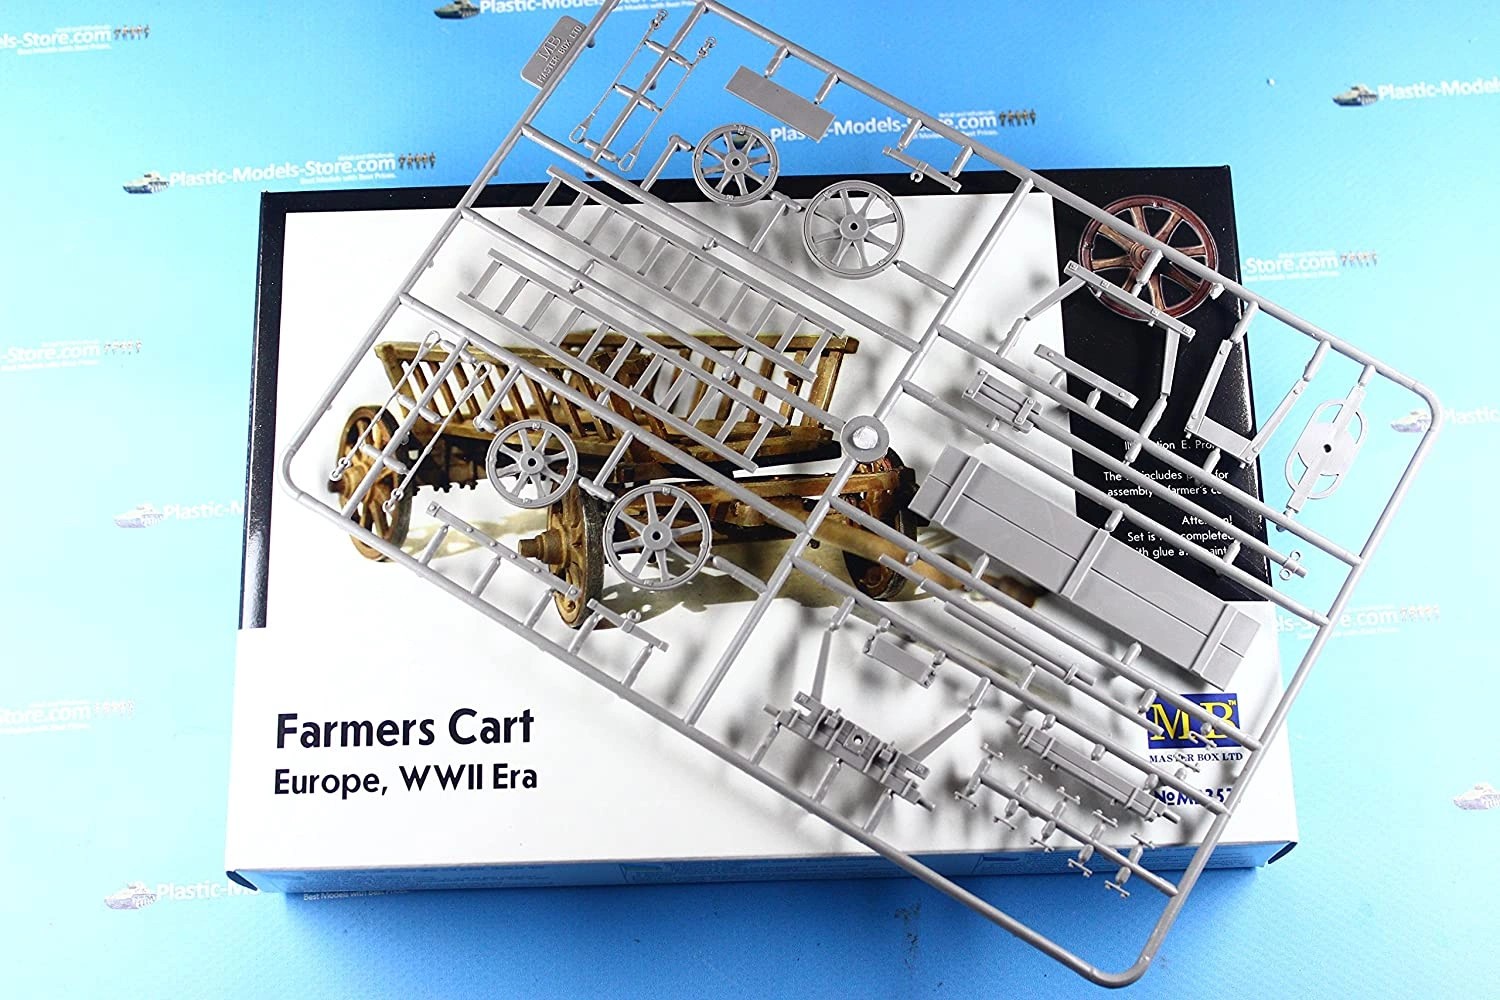 MASTER BOX 1/35 3537 "Farmer's Cart", Europe, WWII Era" ÇİFTLİK ARABASI MAKETİ